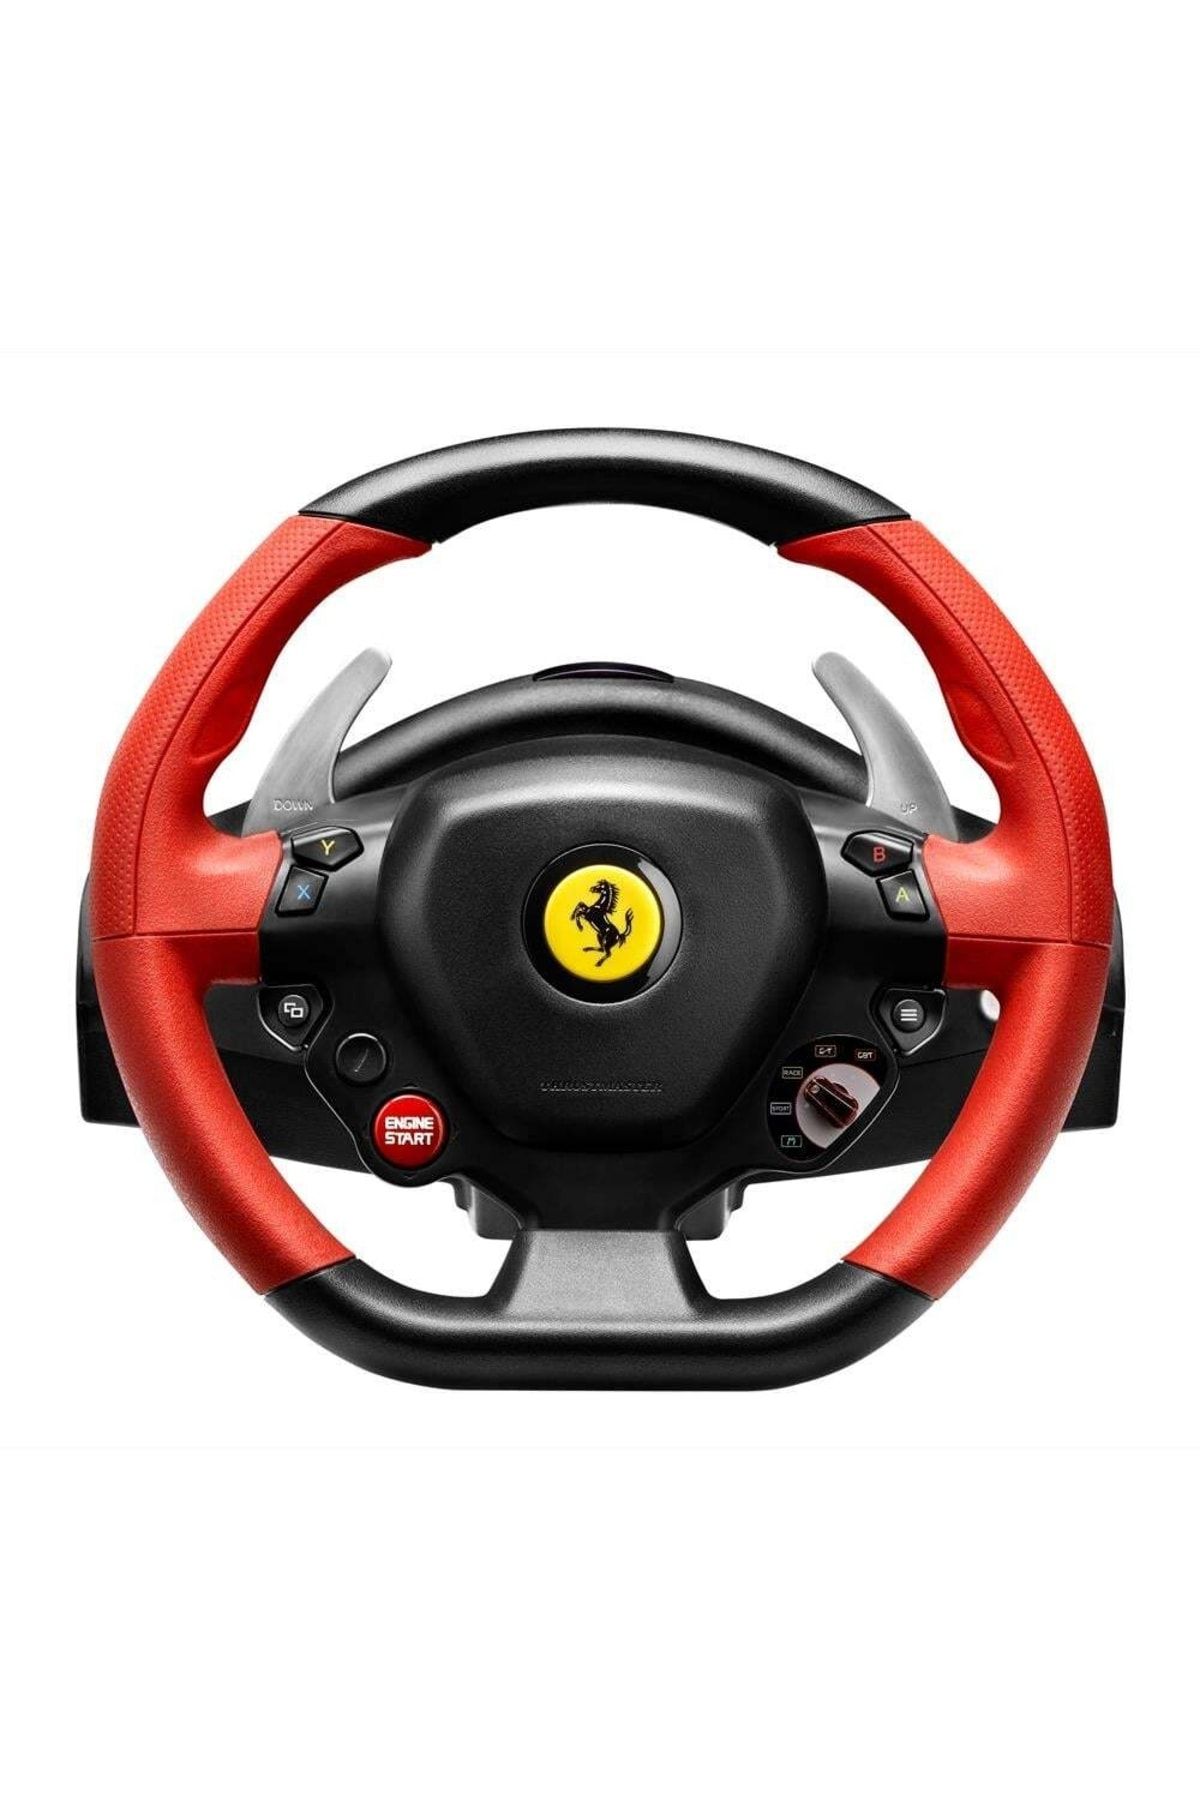 Thrustmaster t80 ferrari. Thrustmaster Ferrari f458. Игровой руль Thrustmaster Ferrari 458. Руль Трастмастер Феррари. Руль Thrustmaster Ferrari 458 Spider Racing Wheel для Xbox one.